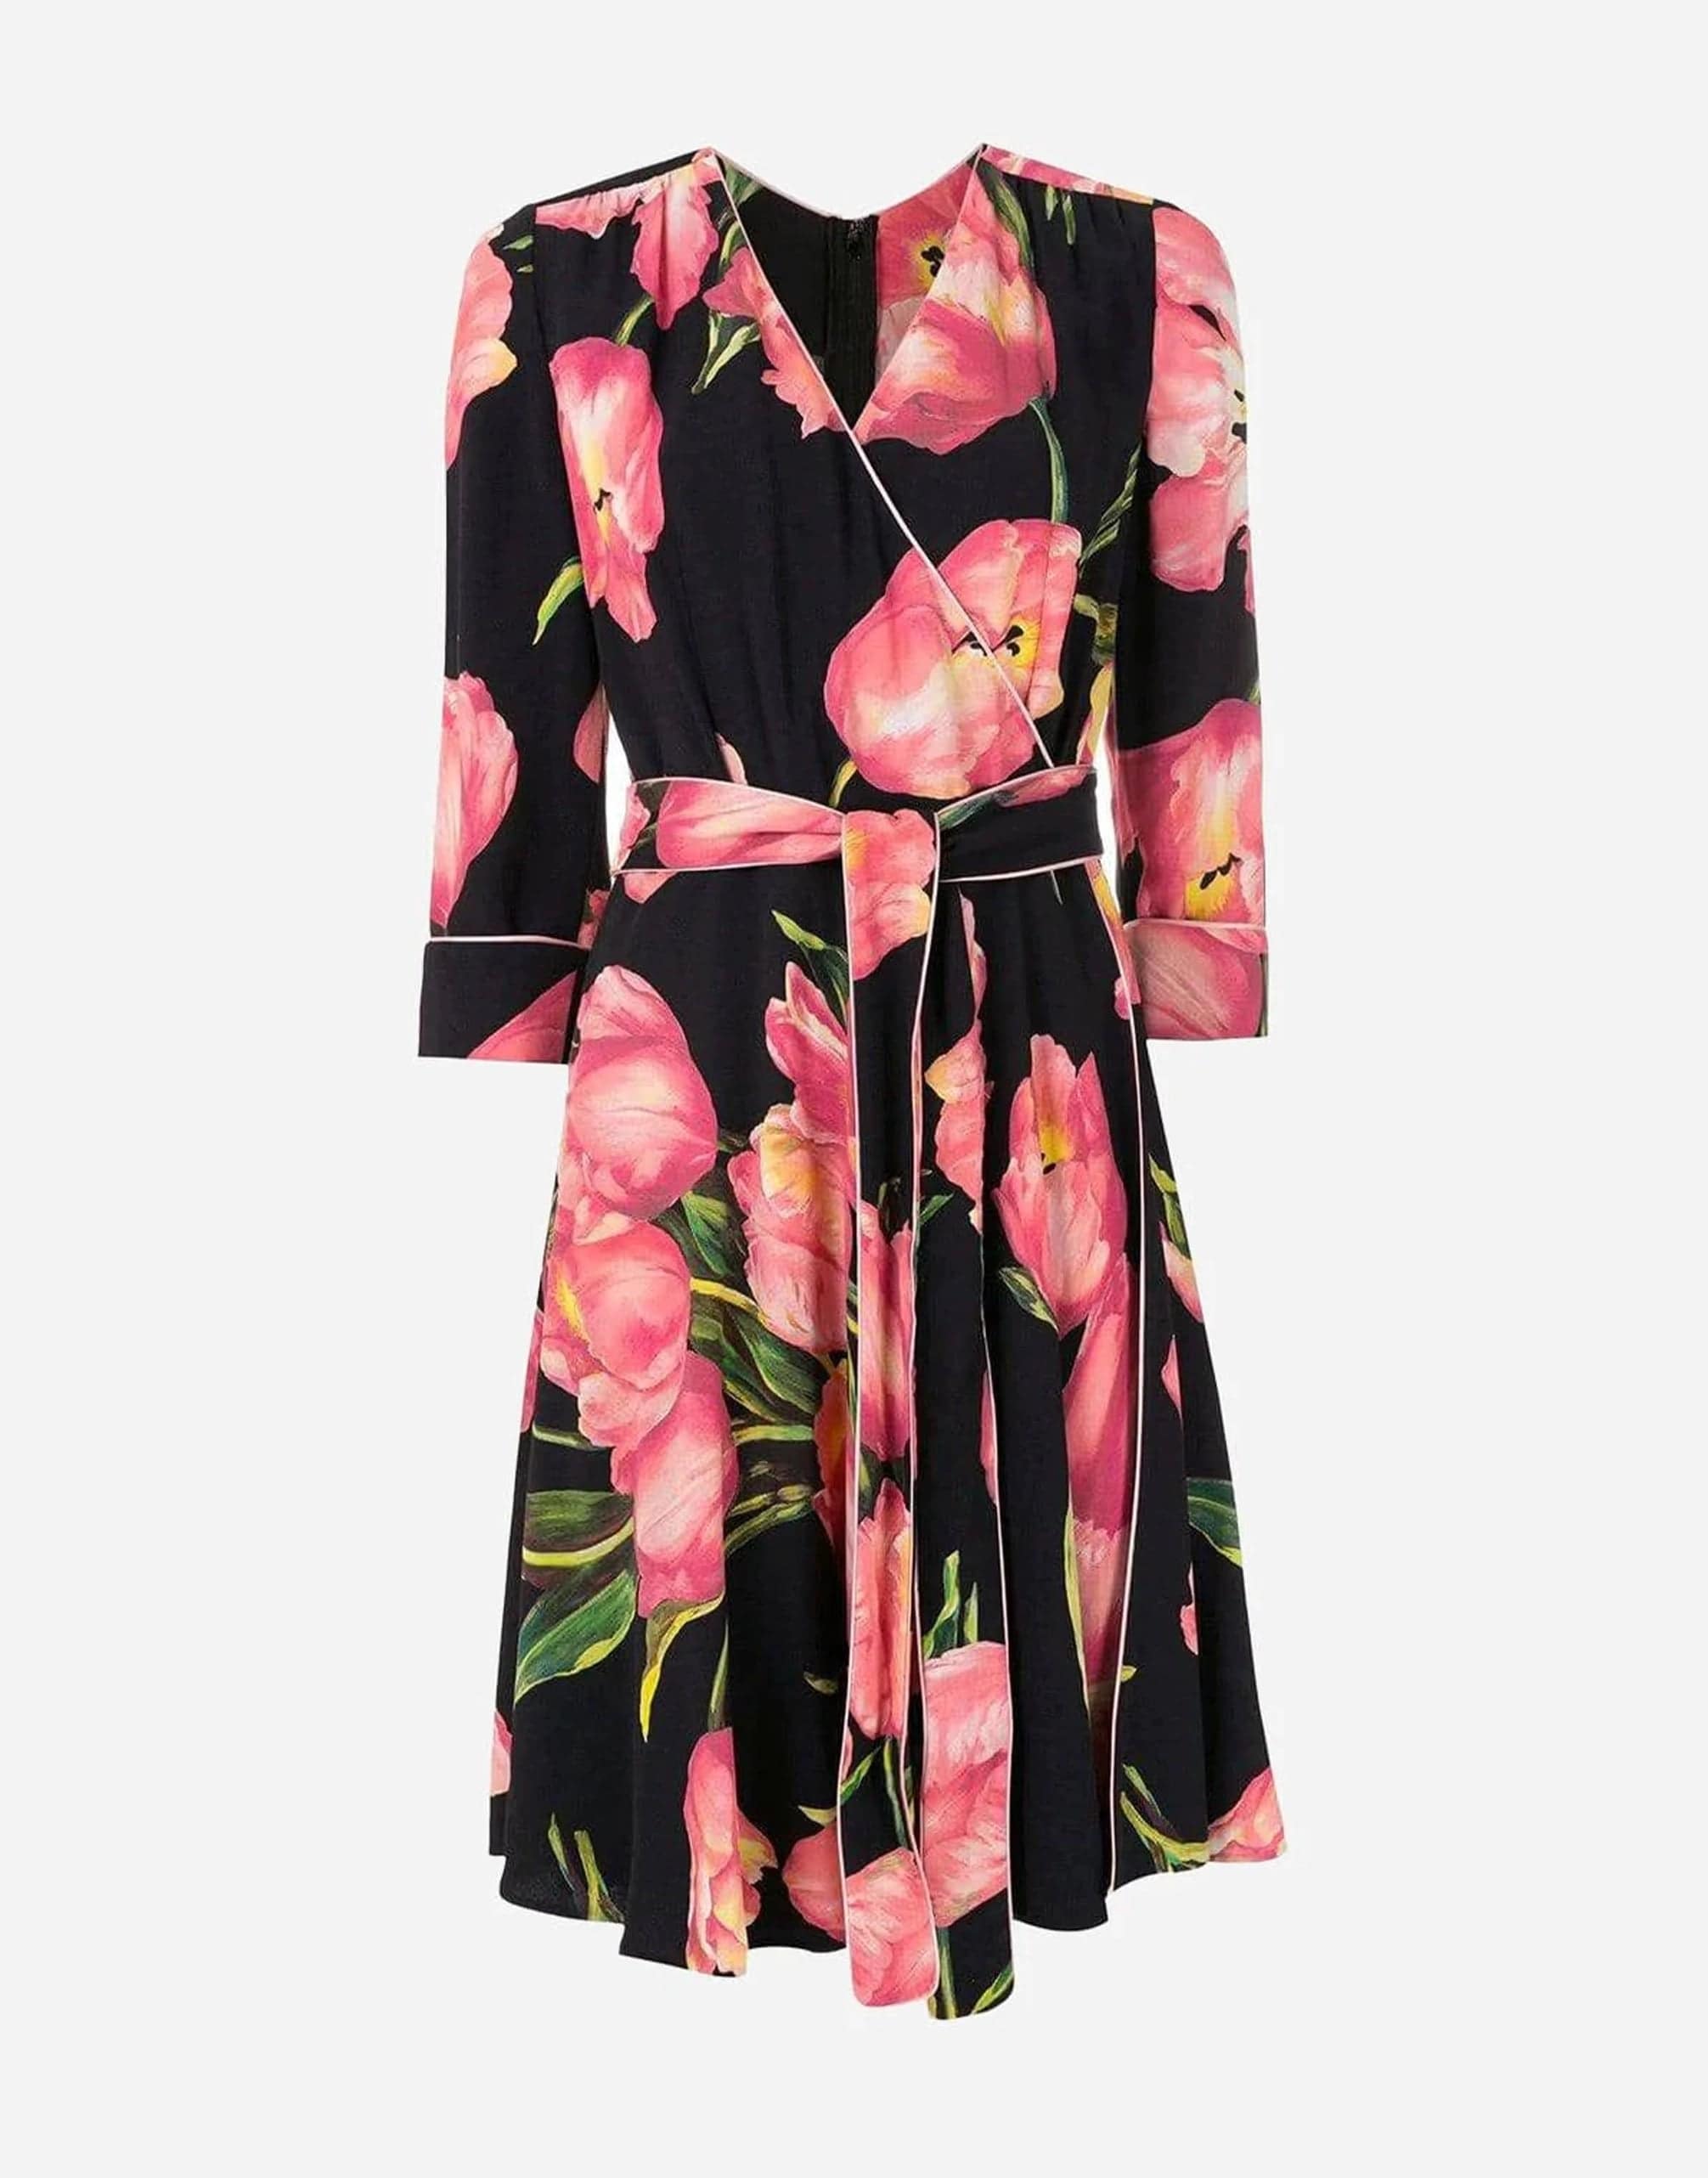 Dolce & Gabbana Floral-Print Dress